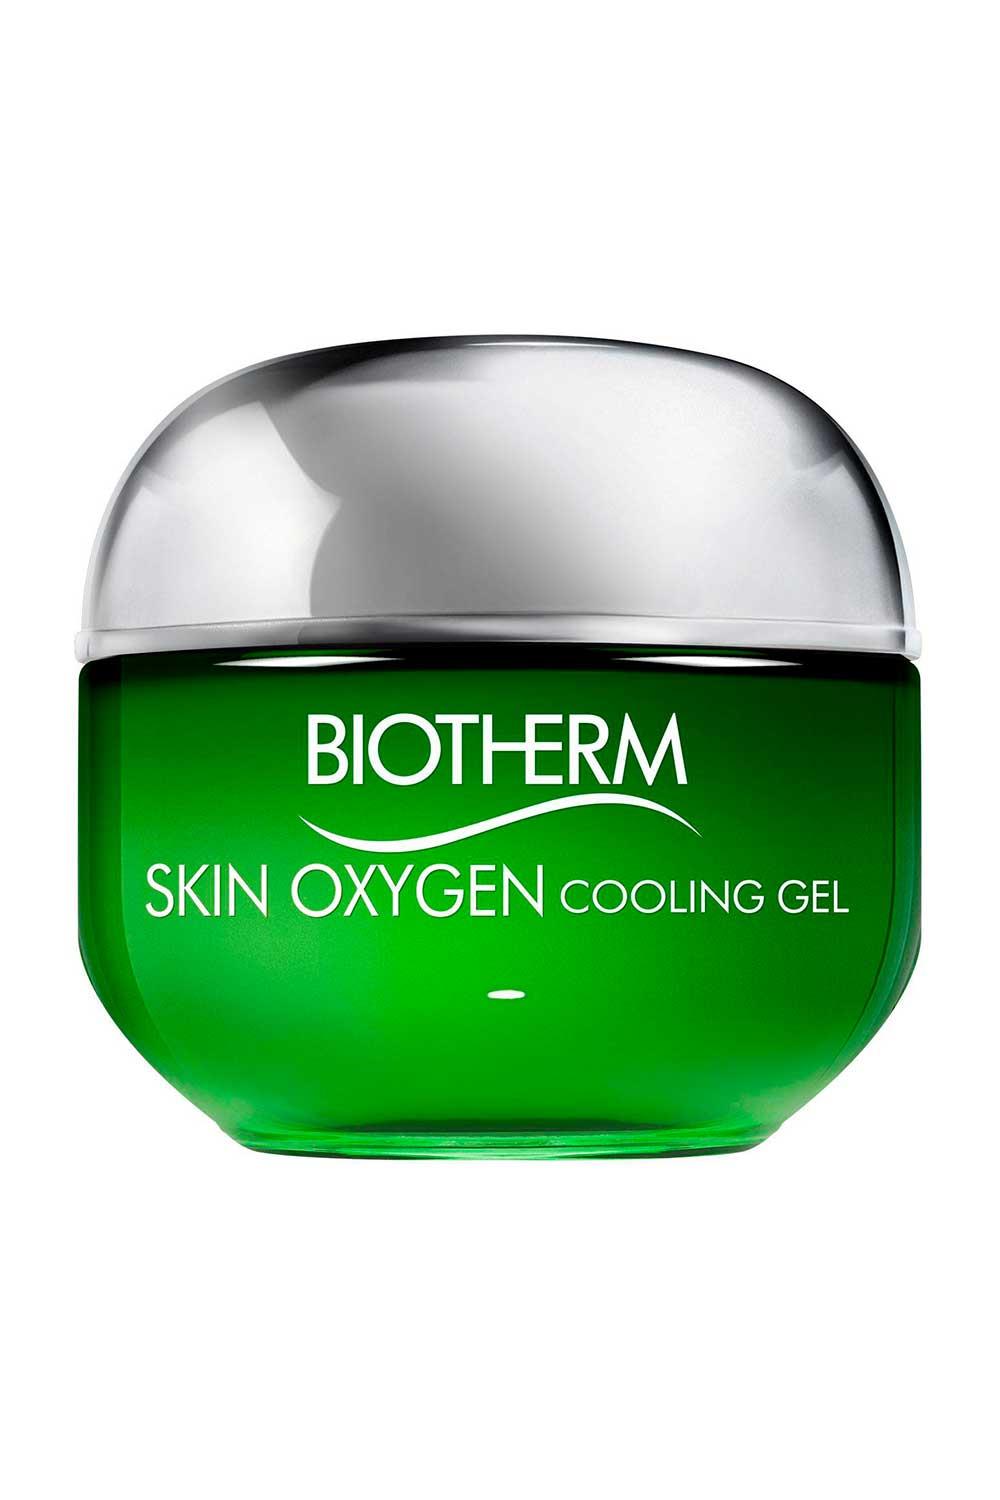 Biothermm. A los 30: Skin Oxygen Cooling-Gel Antioxidante de Biotherm